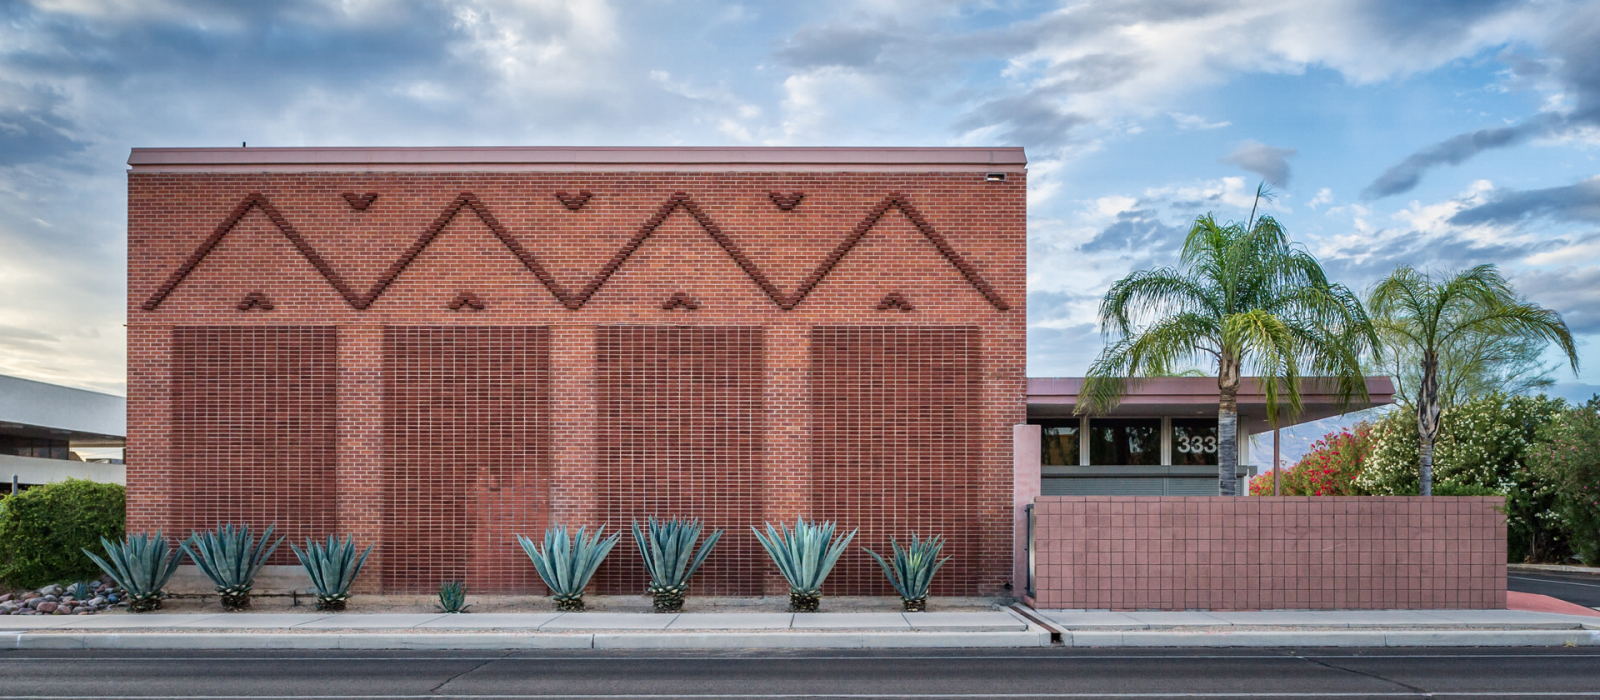 Tucson Modernism Week